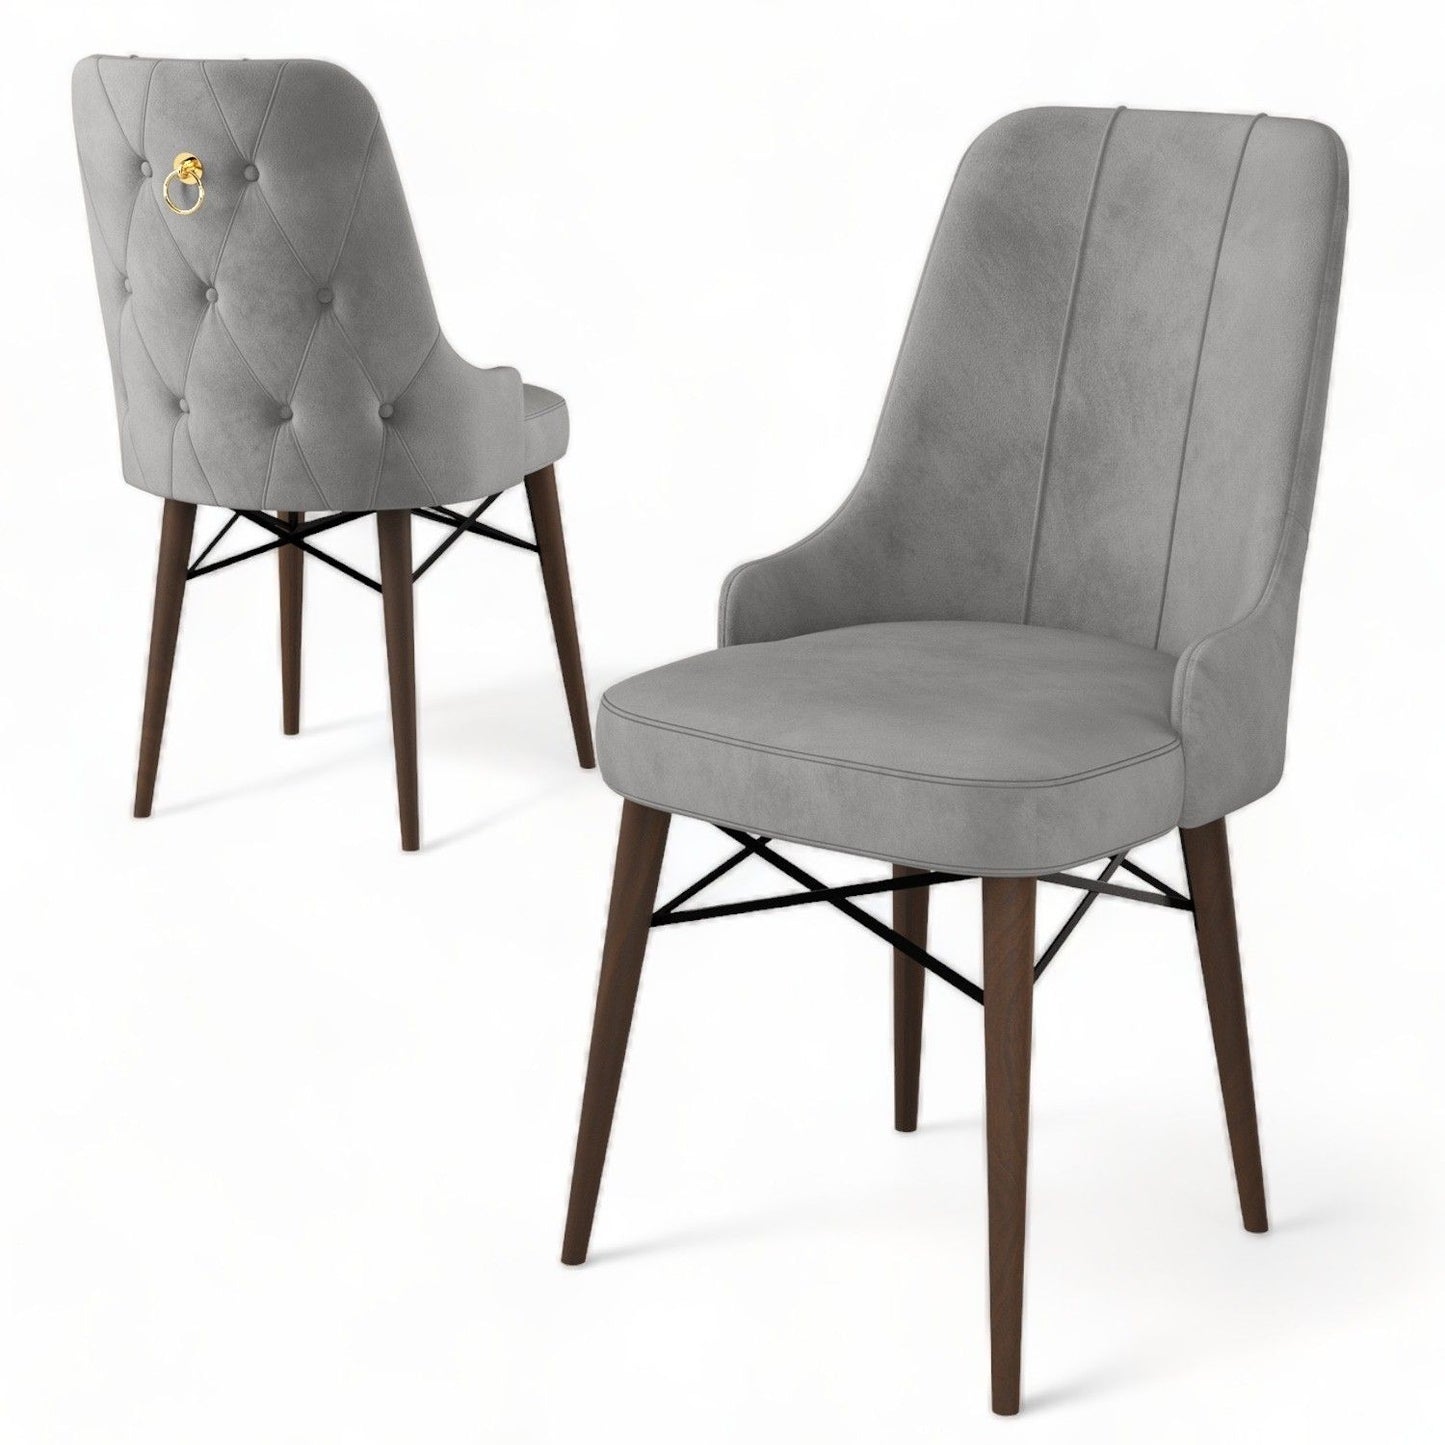 Pare - Grey, Brown - Chair Set (4 Pieces)